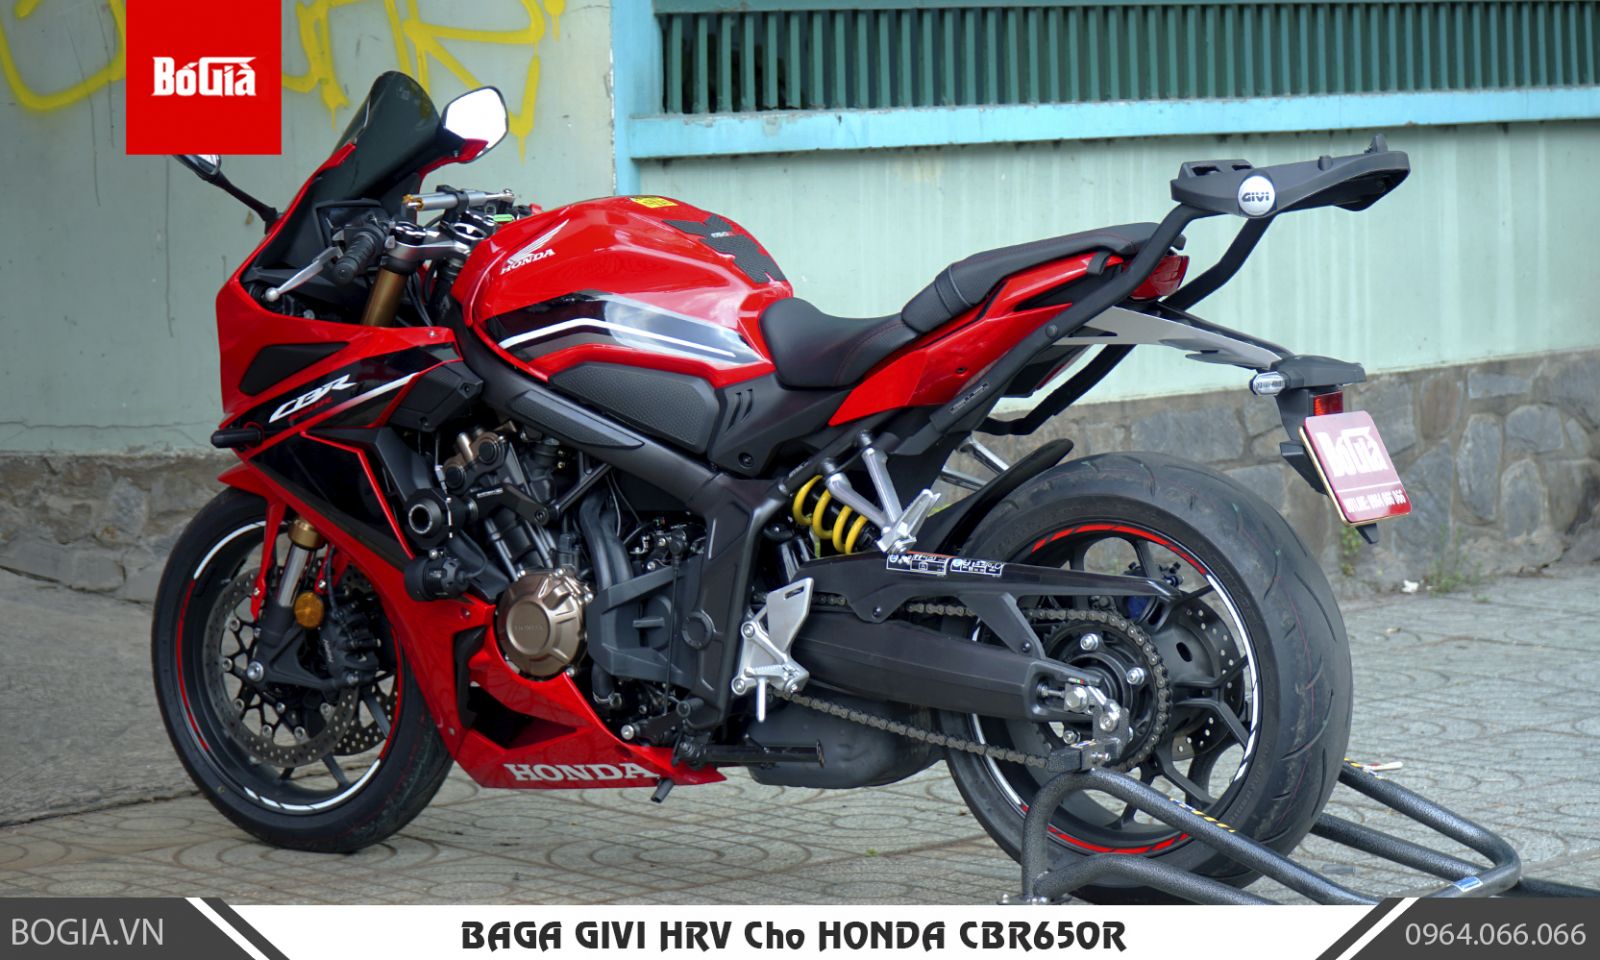 Baga Givi HRV cho Honda CBR650R